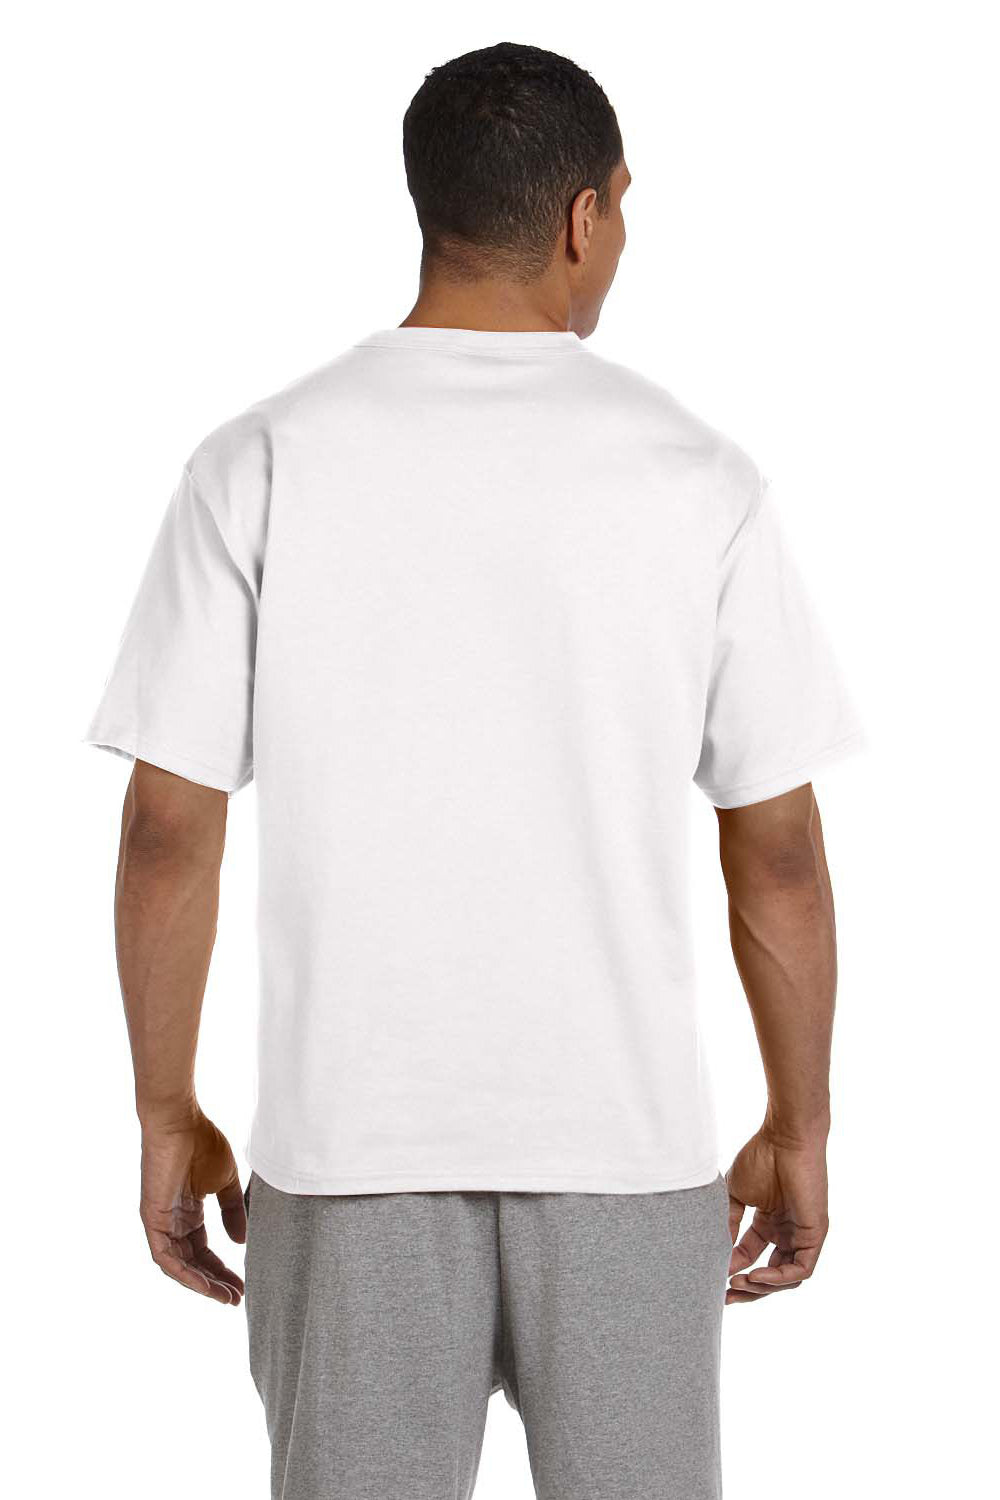 Champion T2102 Mens Heritage Short Sleeve Crewneck T-Shirt White Back